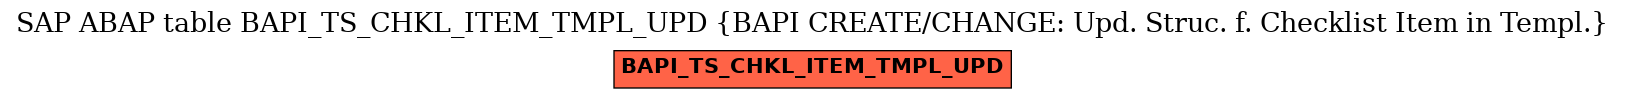 E-R Diagram for table BAPI_TS_CHKL_ITEM_TMPL_UPD (BAPI CREATE/CHANGE: Upd. Struc. f. Checklist Item in Templ.)